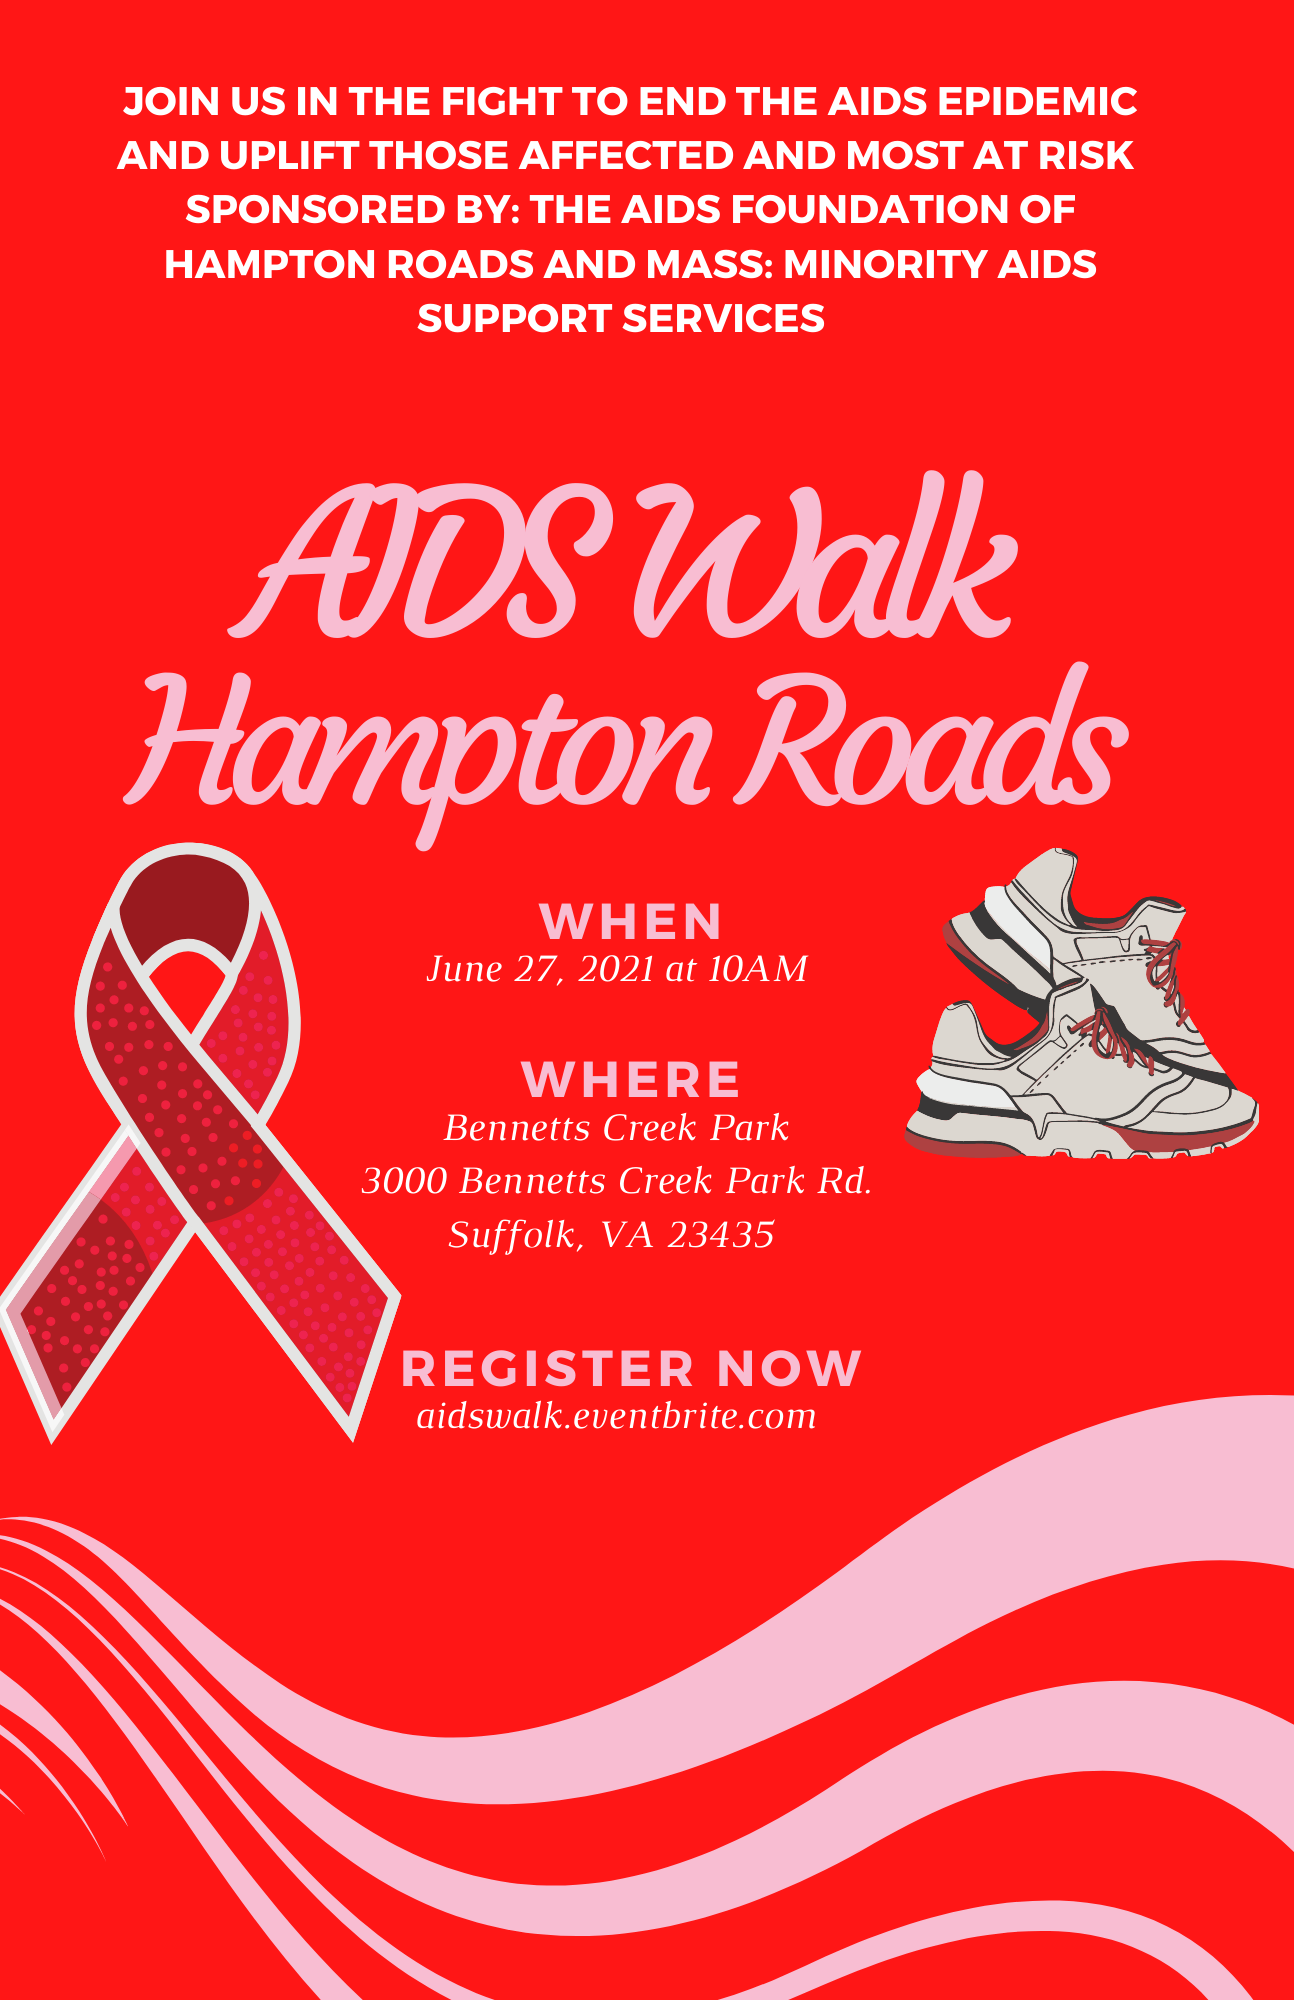 AIDS Walk Hampton Roads Minority Aids Support Services